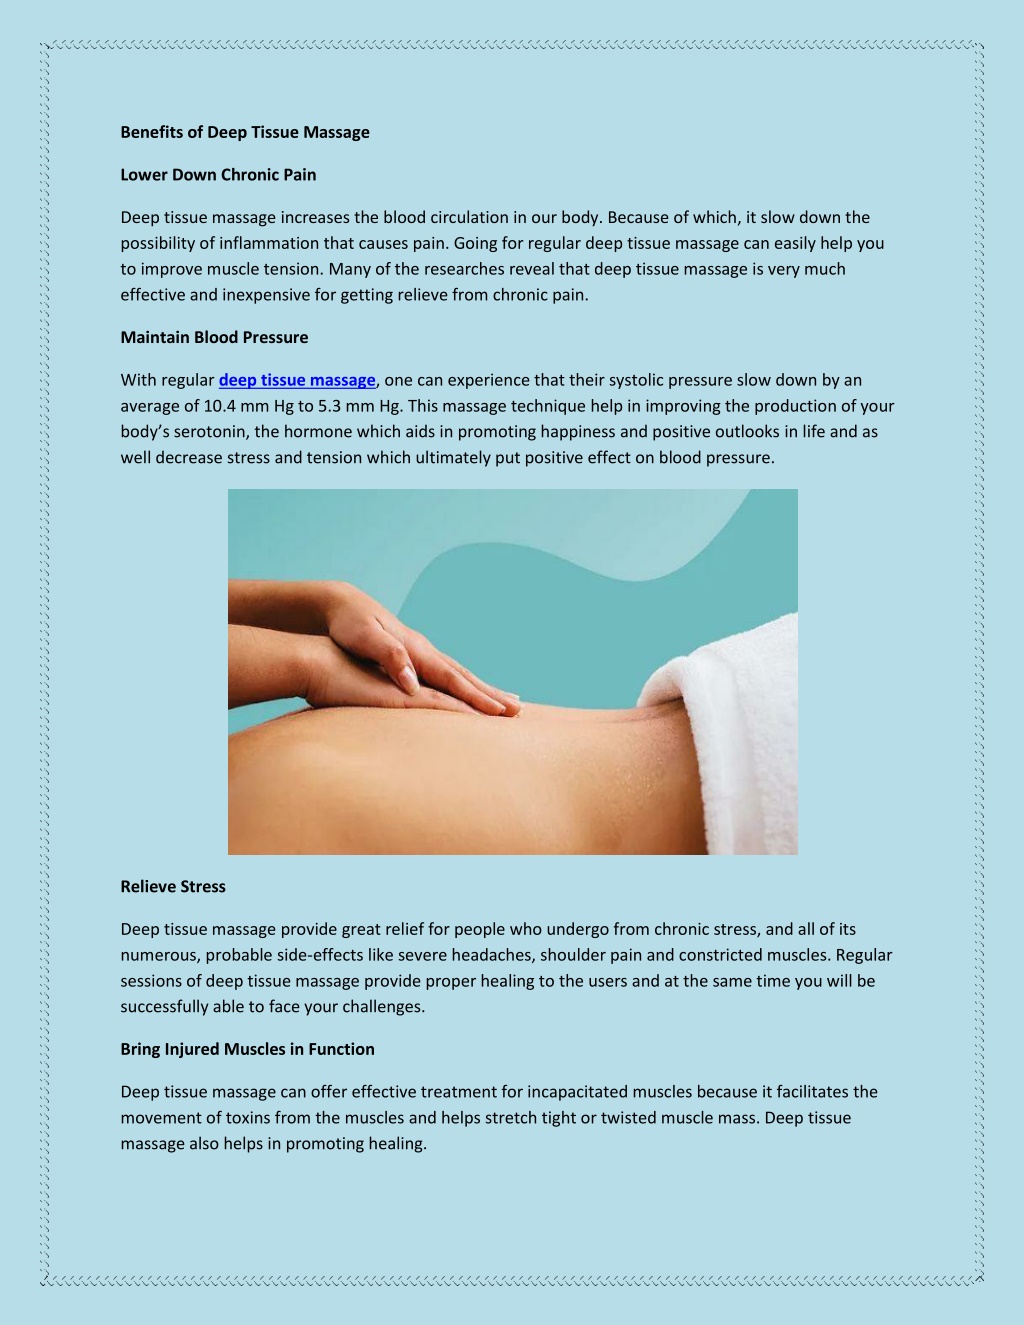 Ppt Benefits Of Deep Tissue Massage Powerpoint Presentation Free Download Id12078105